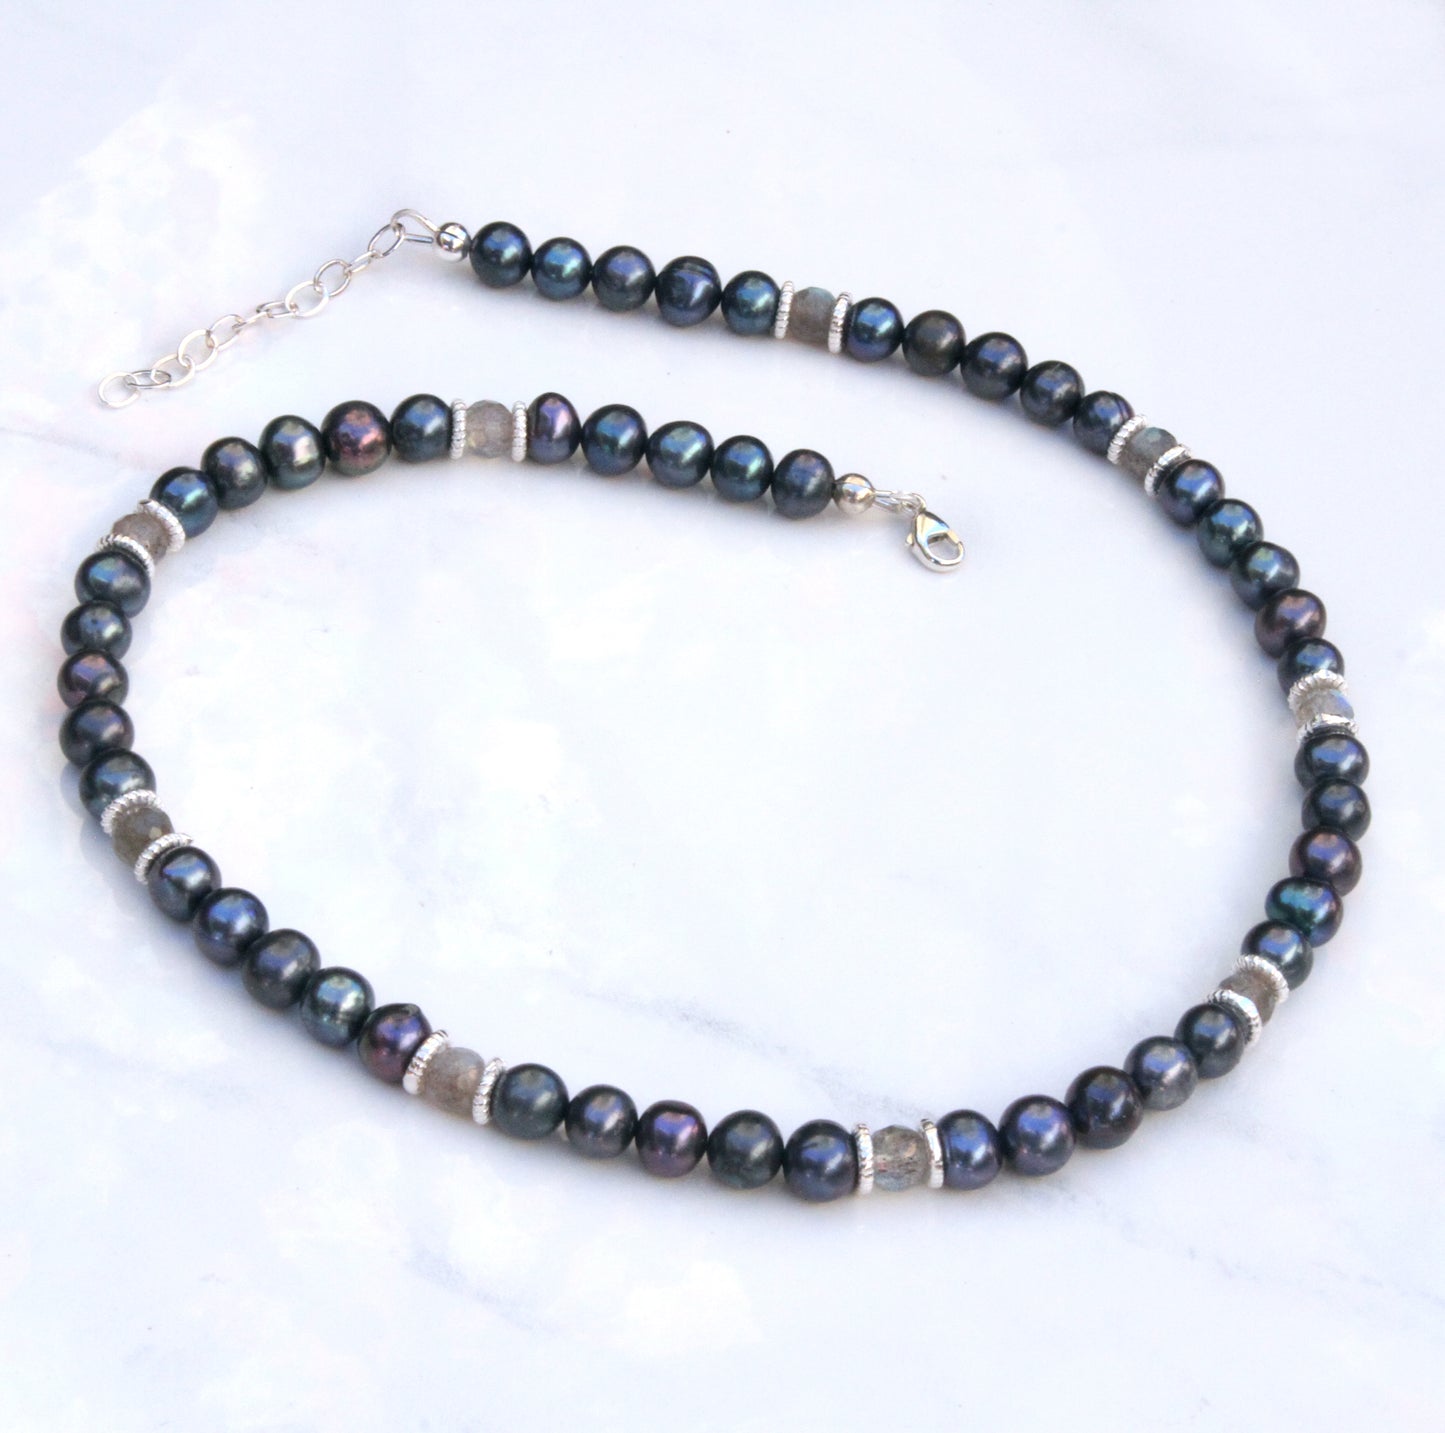 Natural Freshwater Black & Blue Pearls, Labradorite gemstones, and Sterling Silver Choker